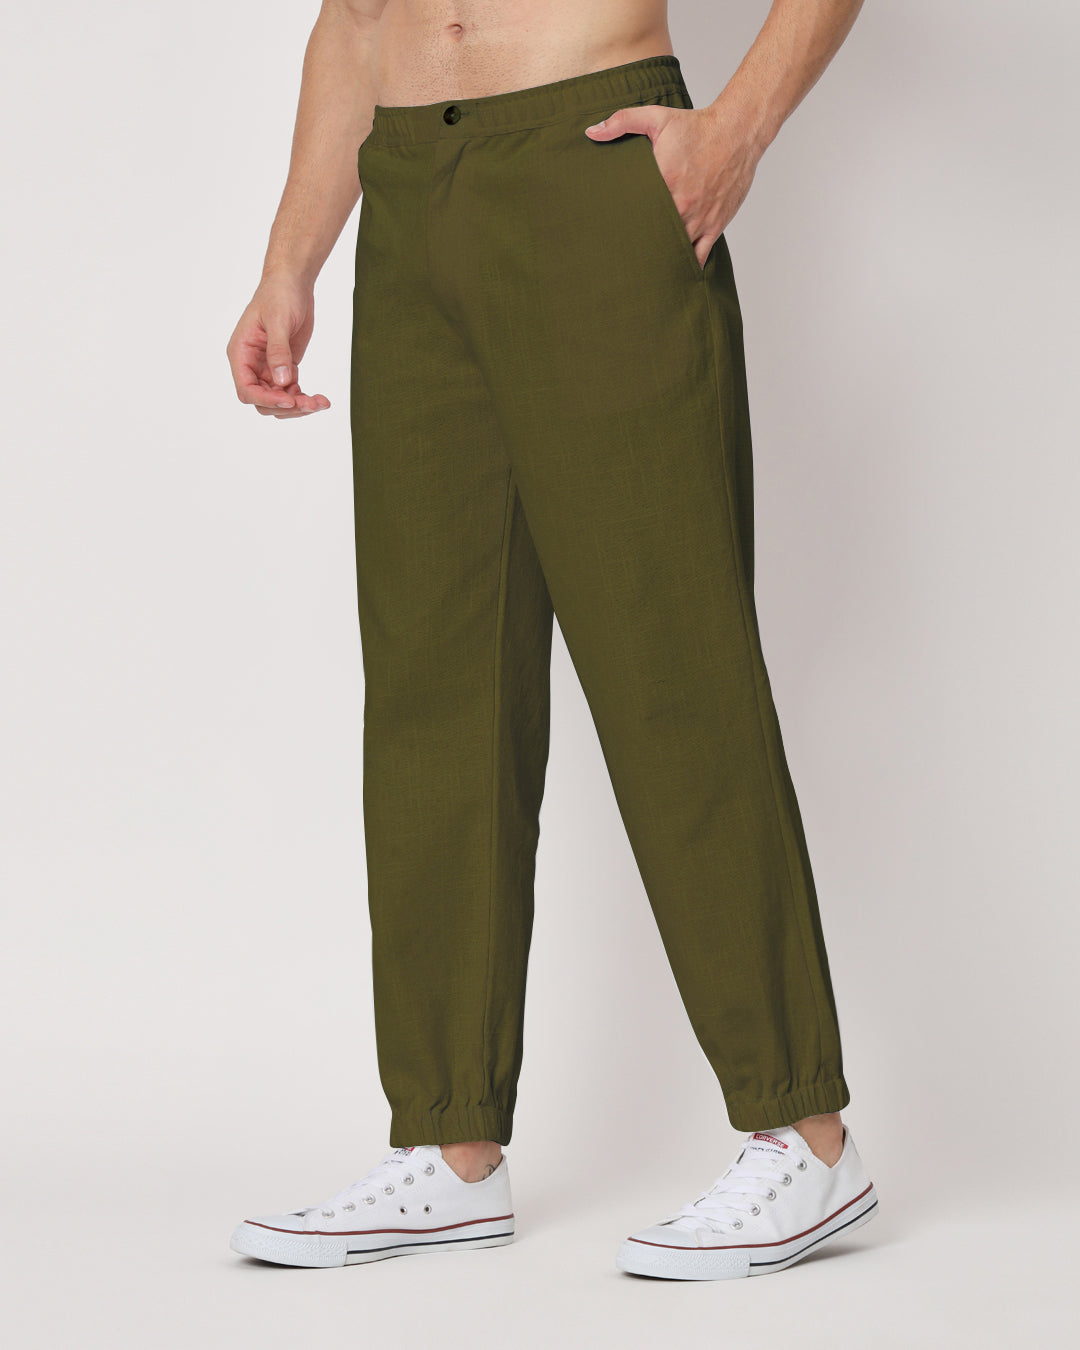 Combo: Black & Olive Green Jog Men's Pants - Set of 2